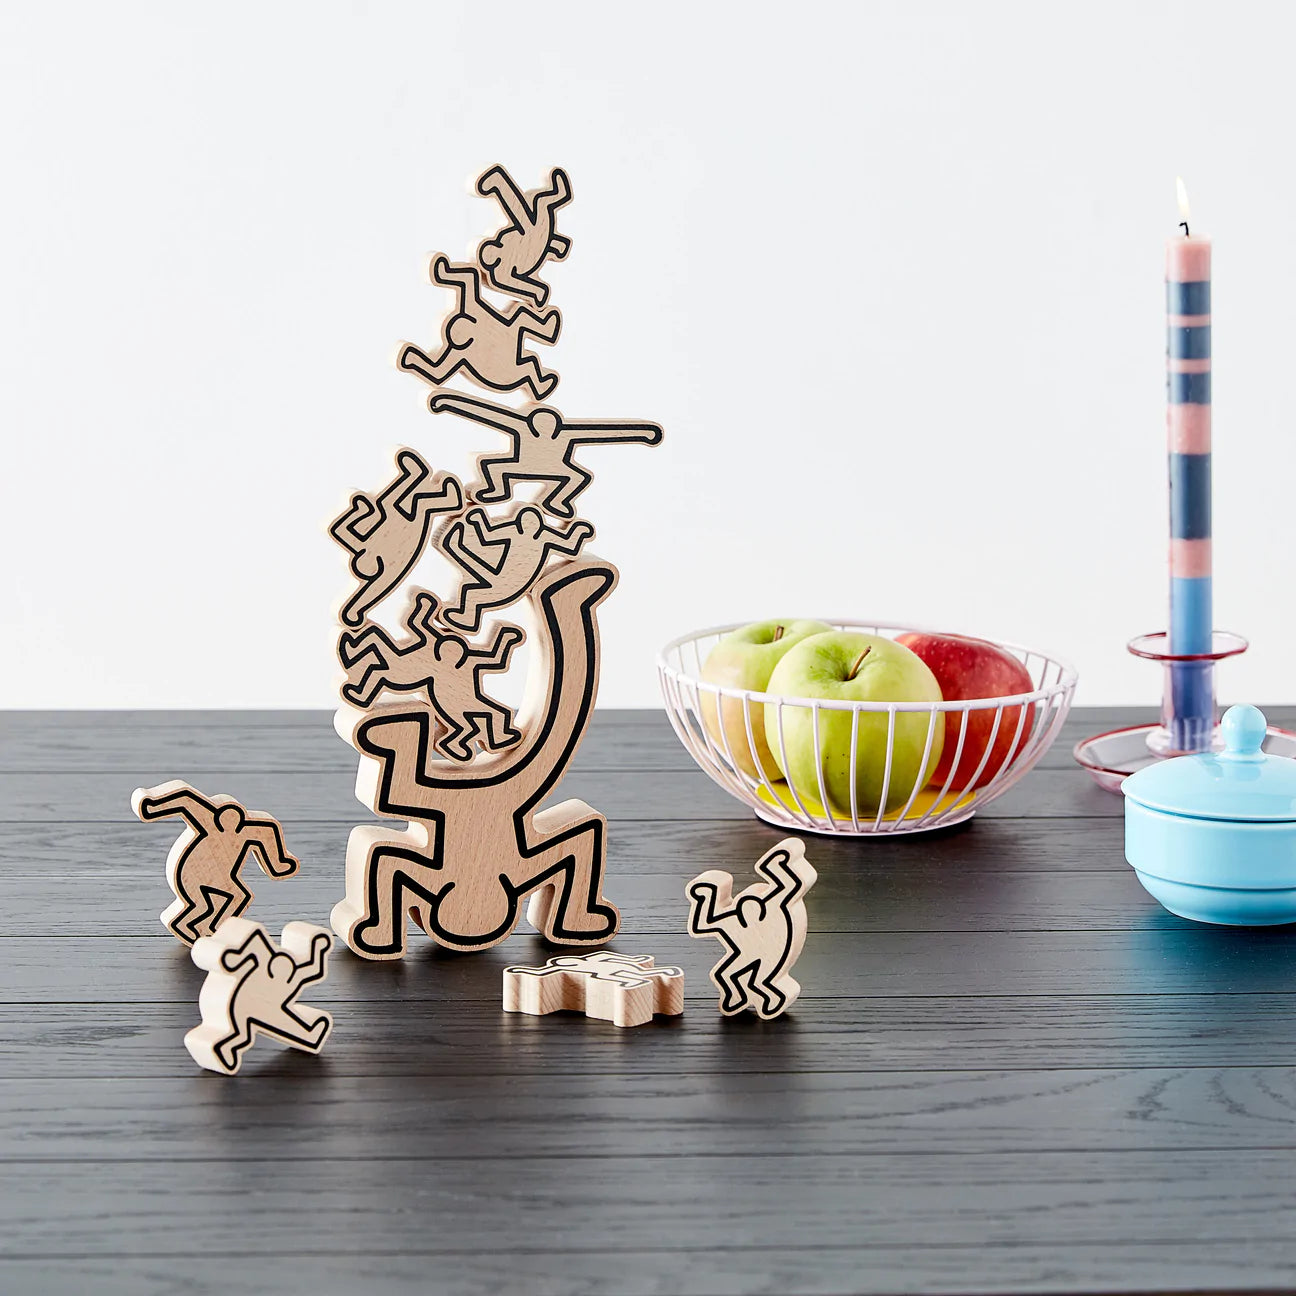 Keith Haring Balancing Game